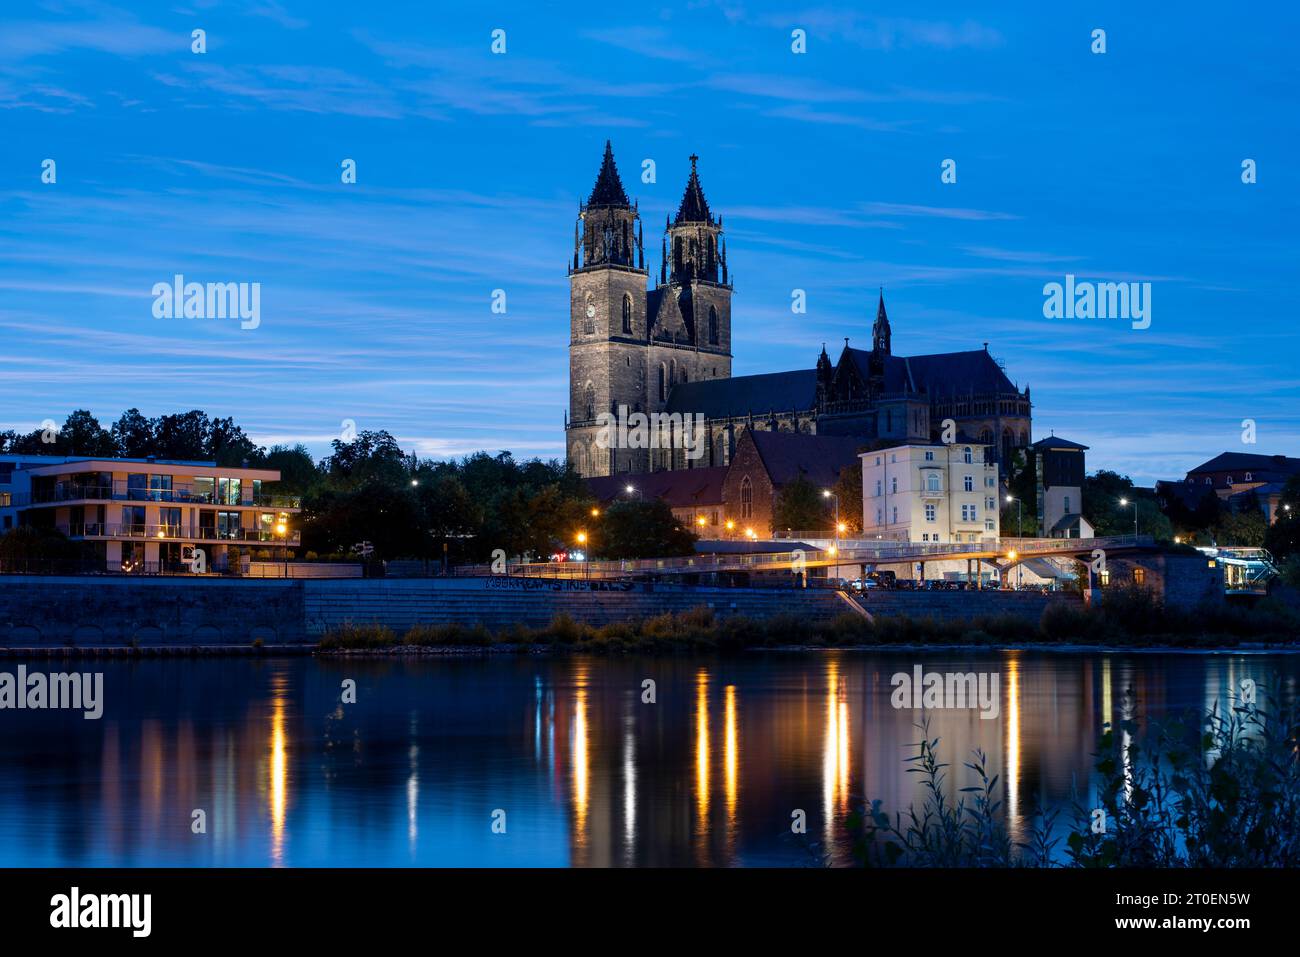 Cattedrale di Magdeburgo, fiume Elba, luci riflesse nell'acqua, Magdeburgo, Sassonia-Anhalt, Germania Foto Stock